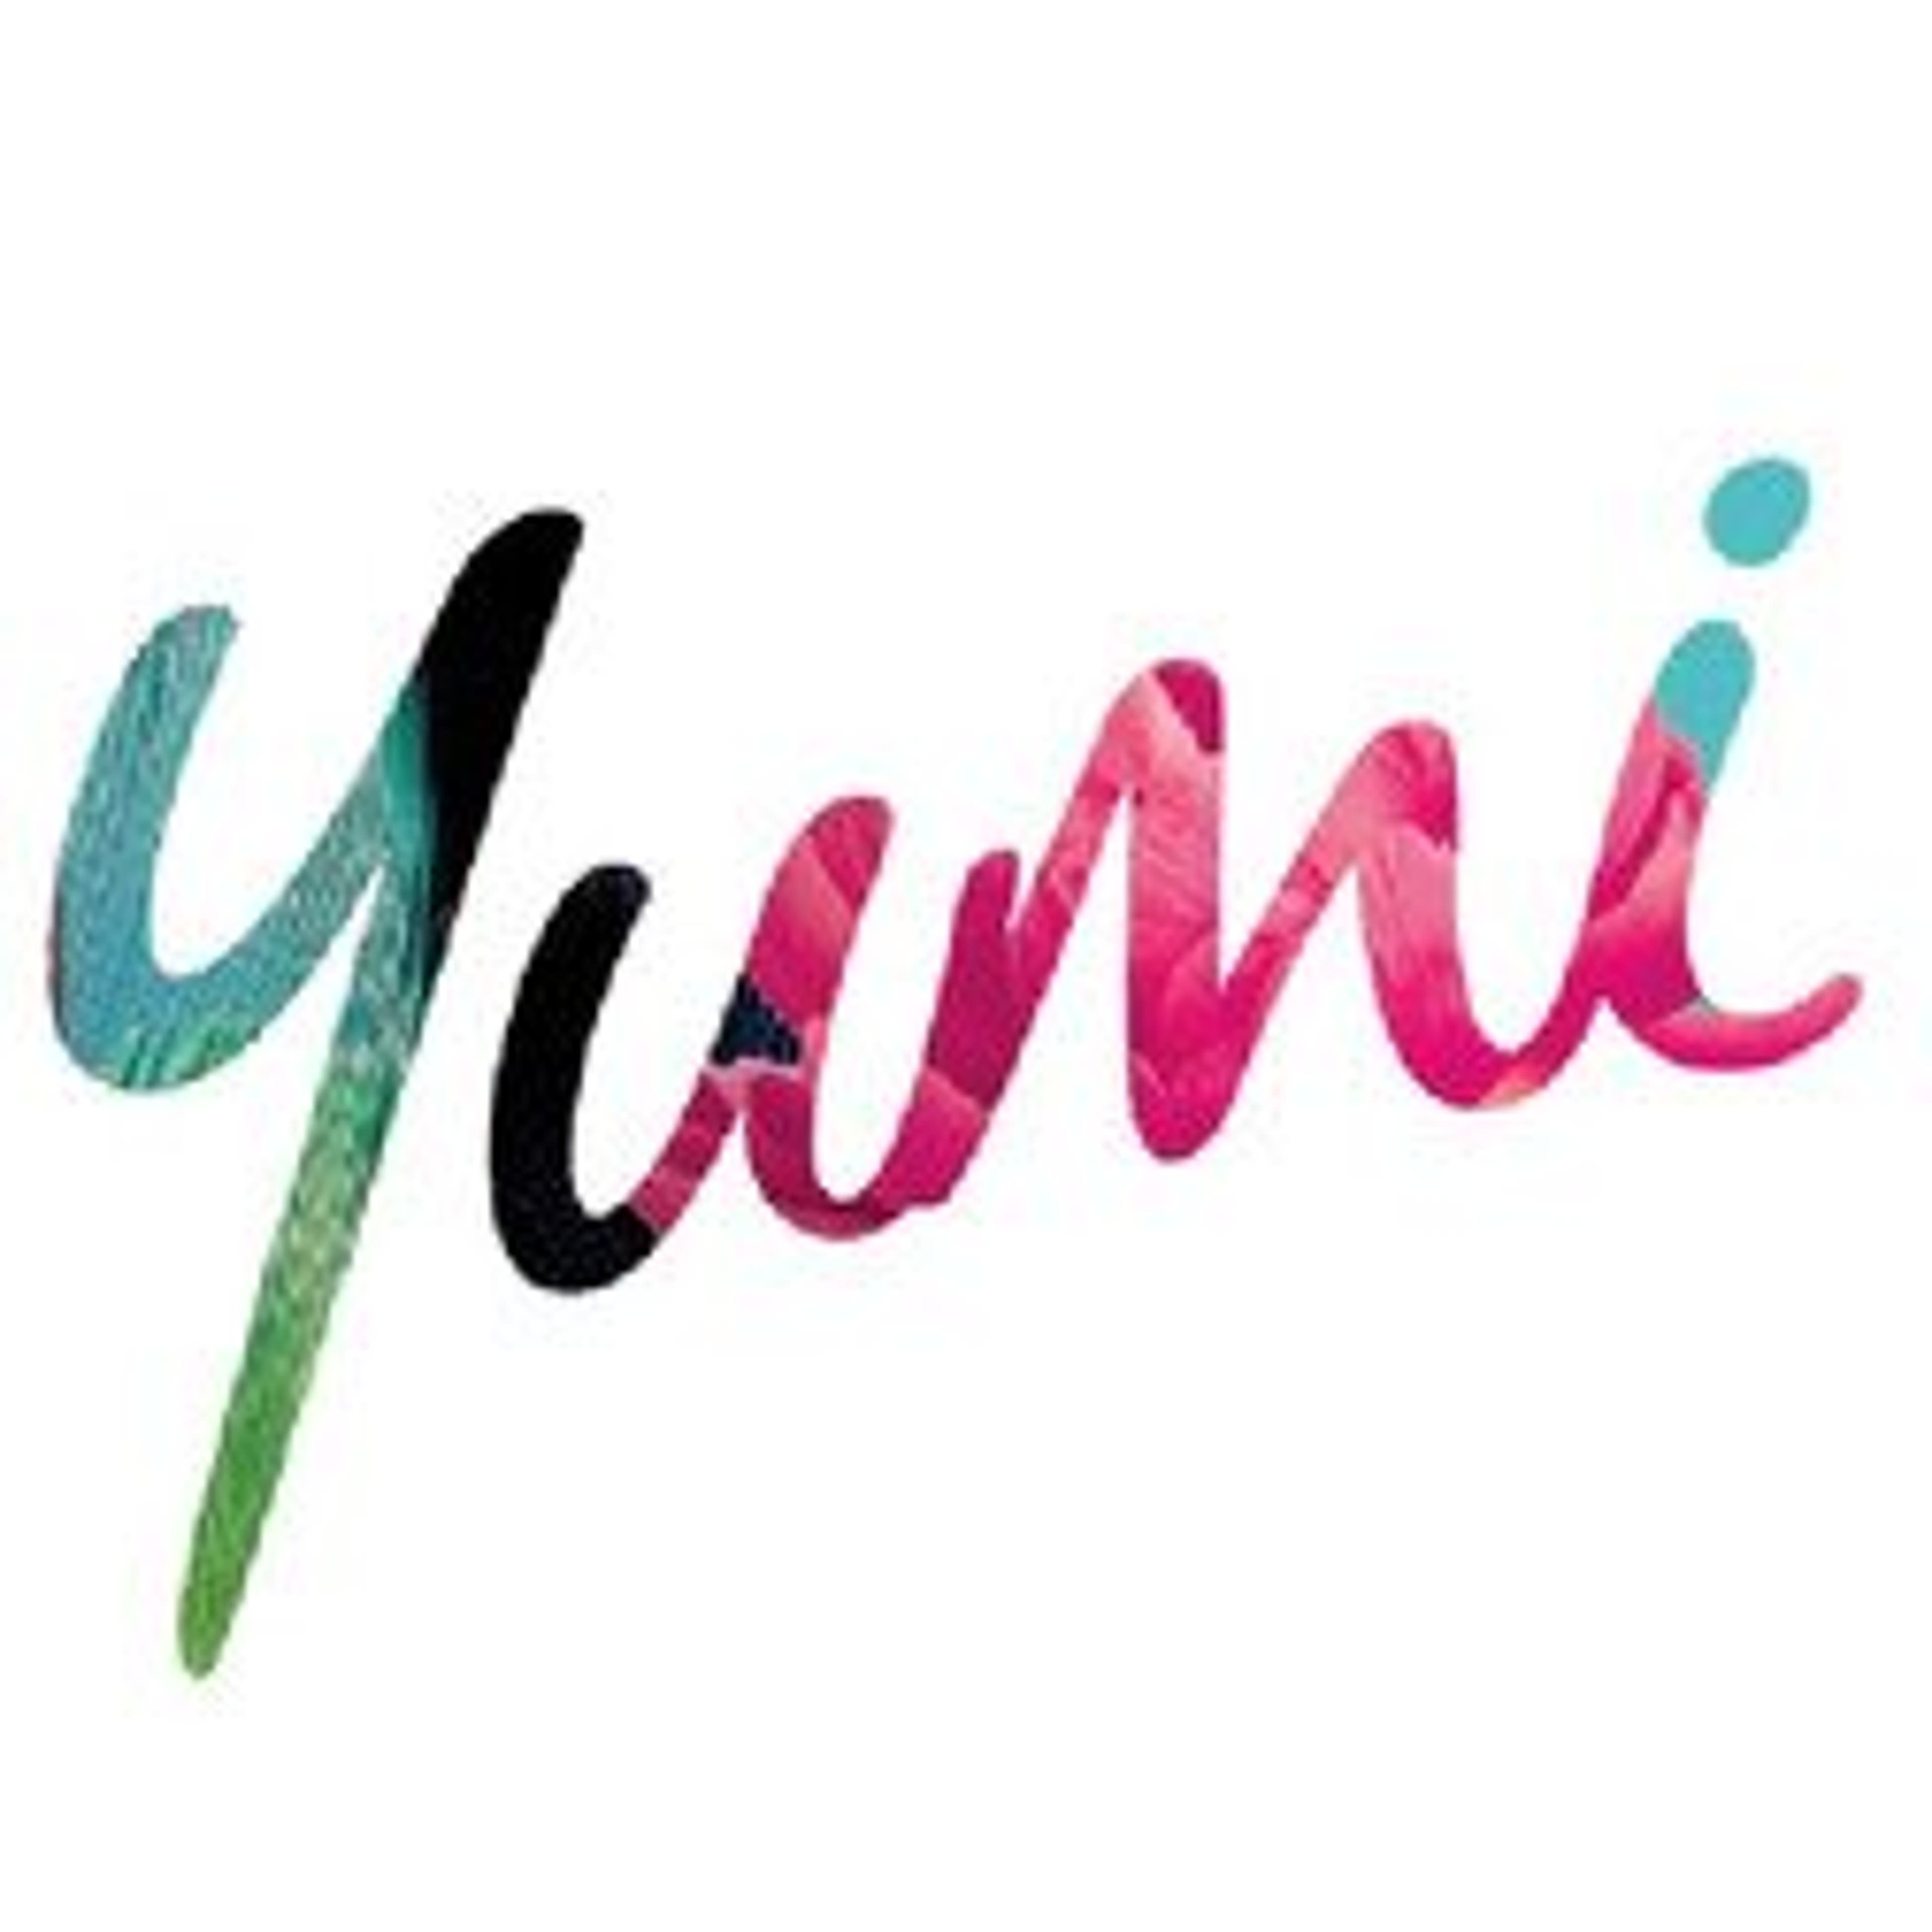  Yumi 